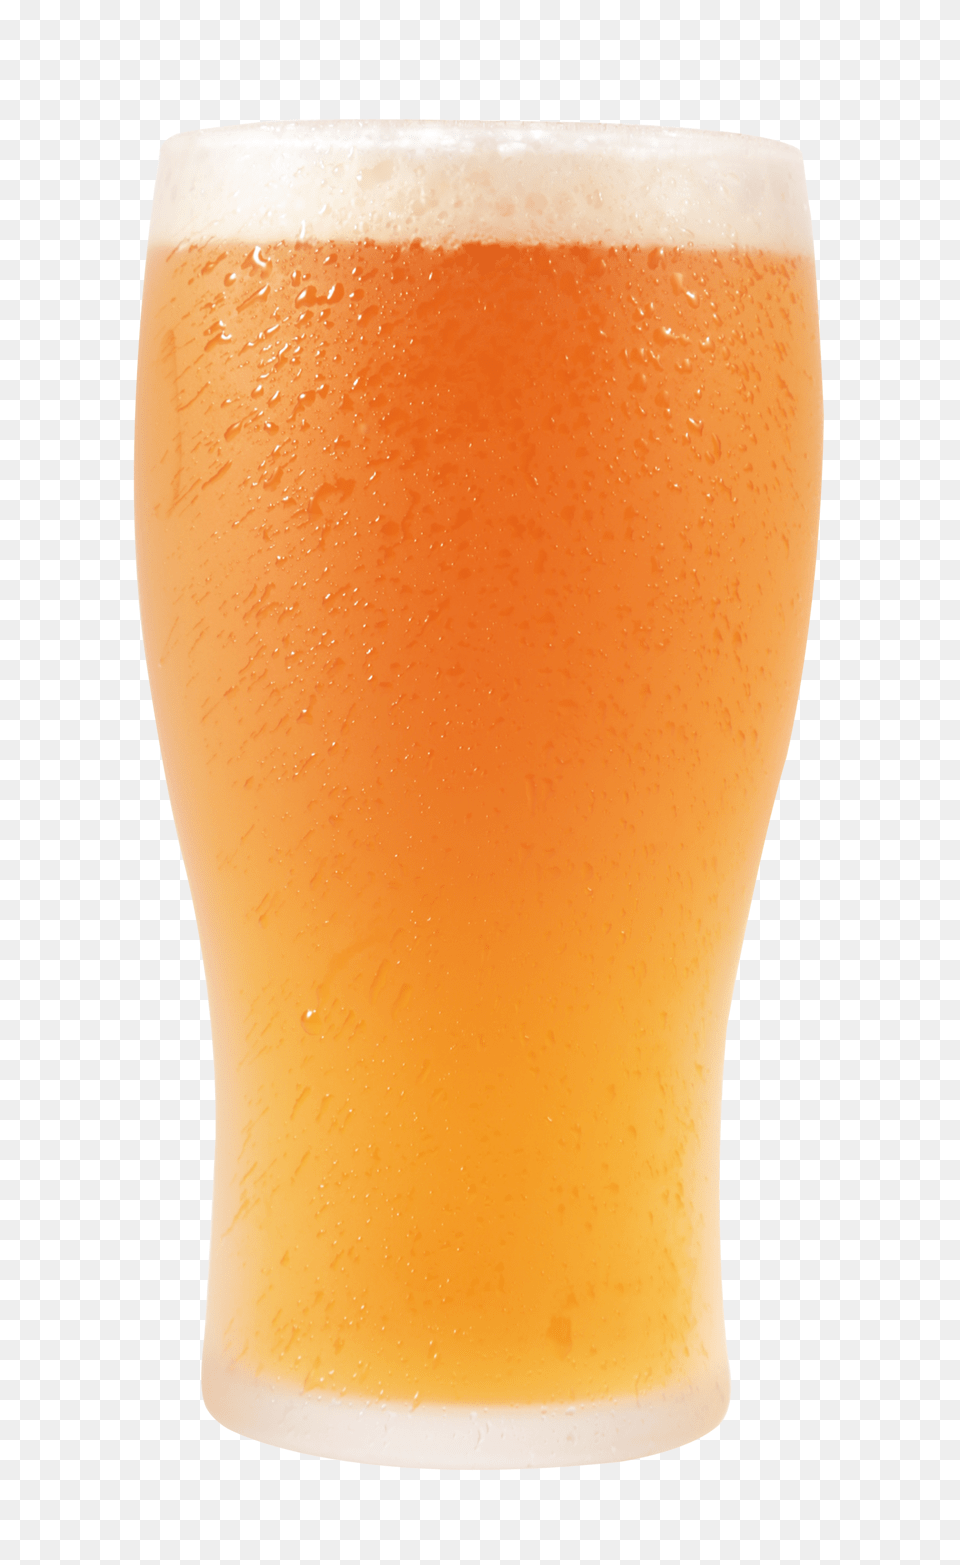 Beer Image, Alcohol, Beer Glass, Beverage, Glass Png